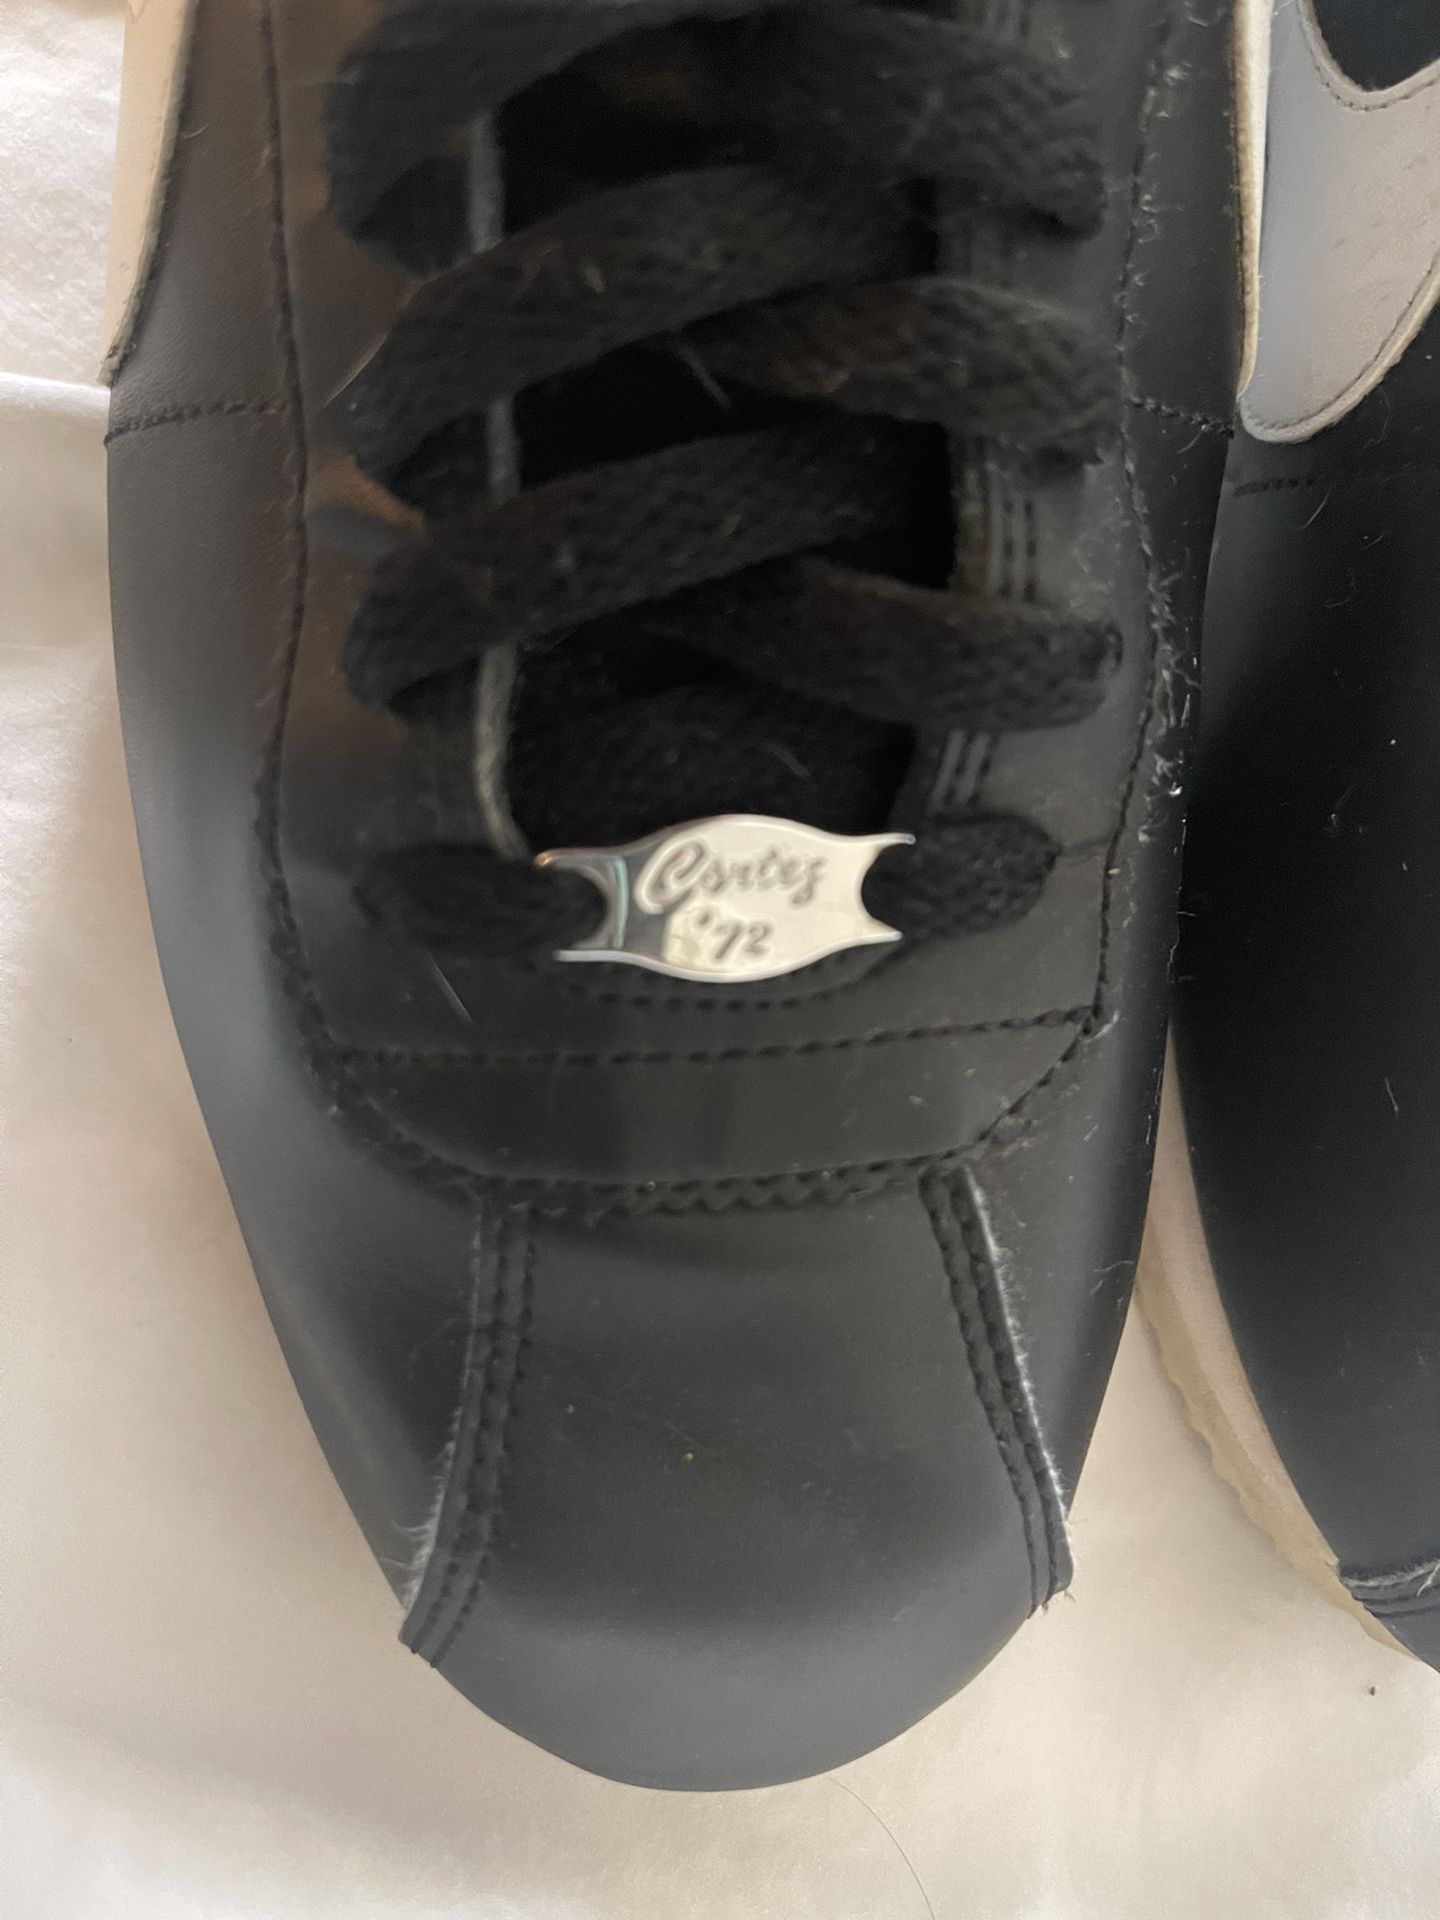 Custom Louis Vuitton Nike Cortez 9.5 1 of 1 sneakers for Sale in Riverview,  FL - OfferUp